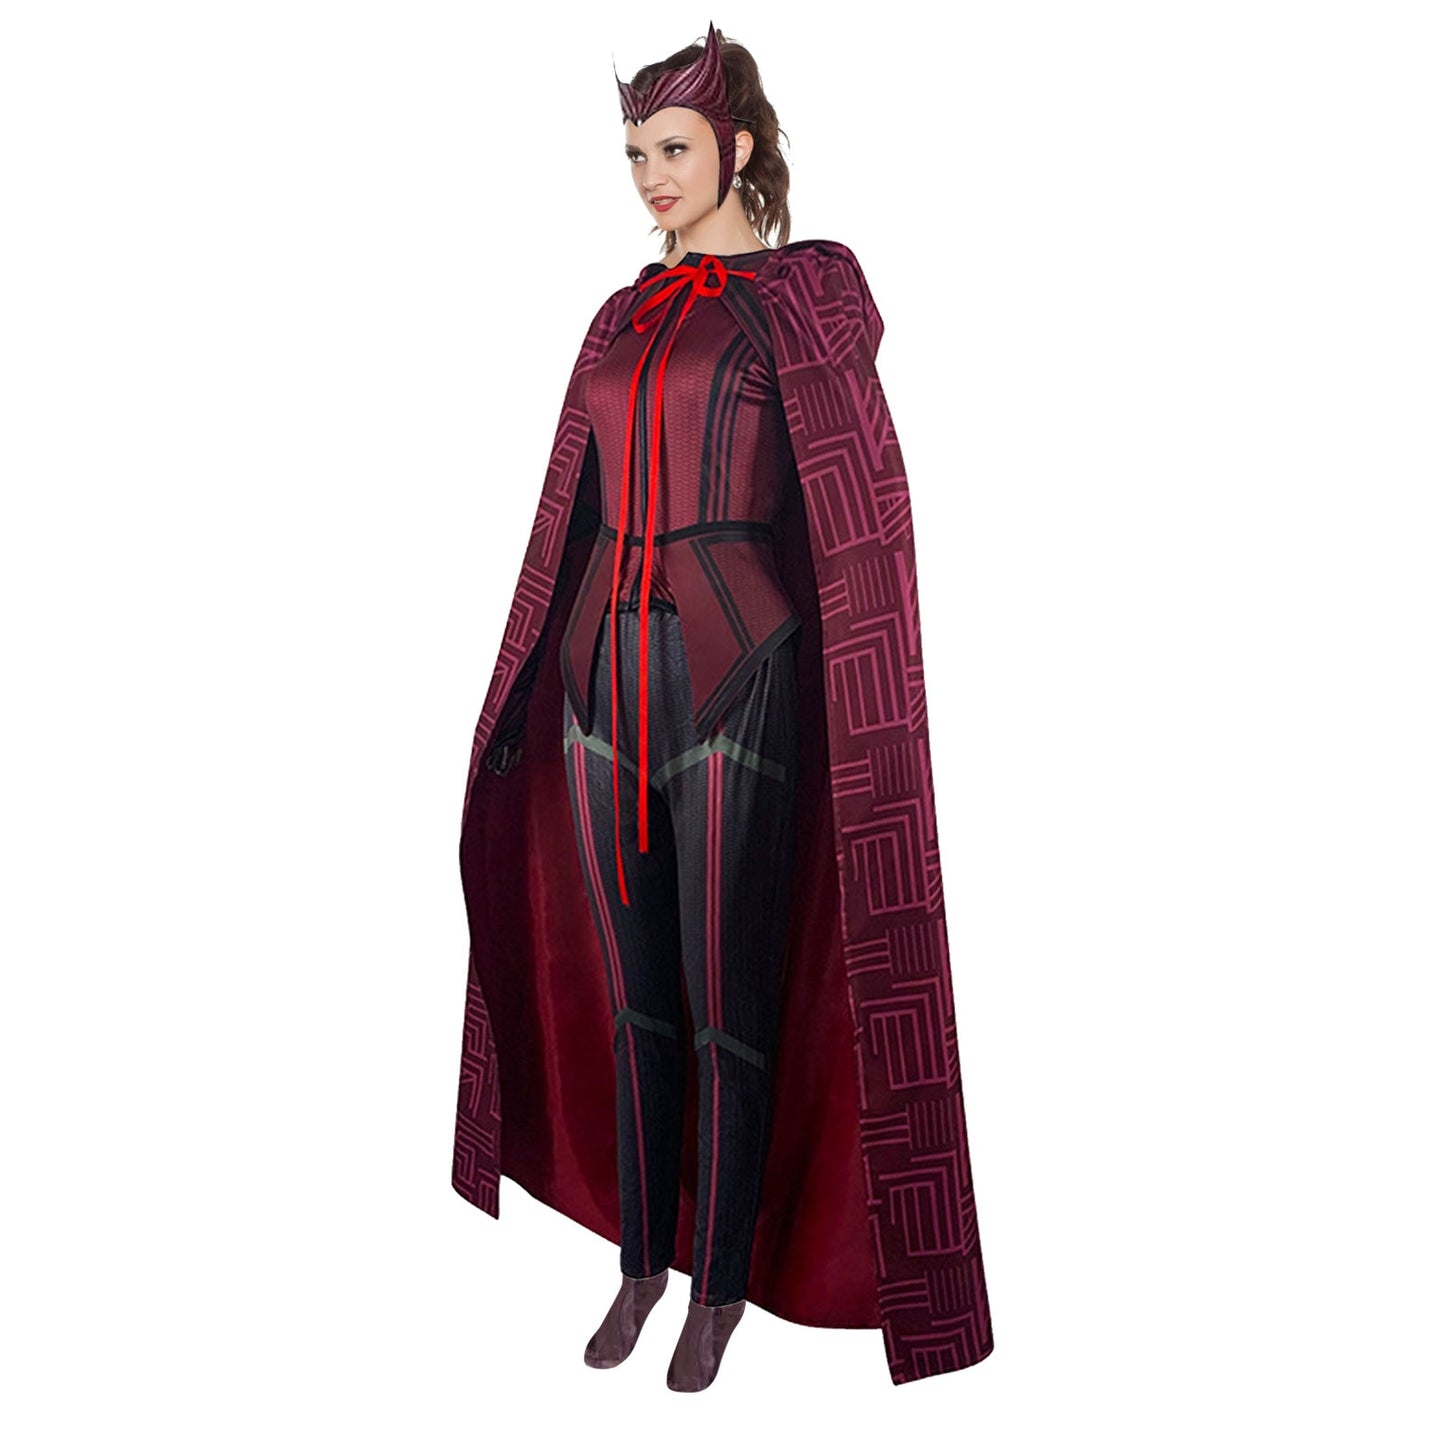 Wanda Vision Costume For Halloween